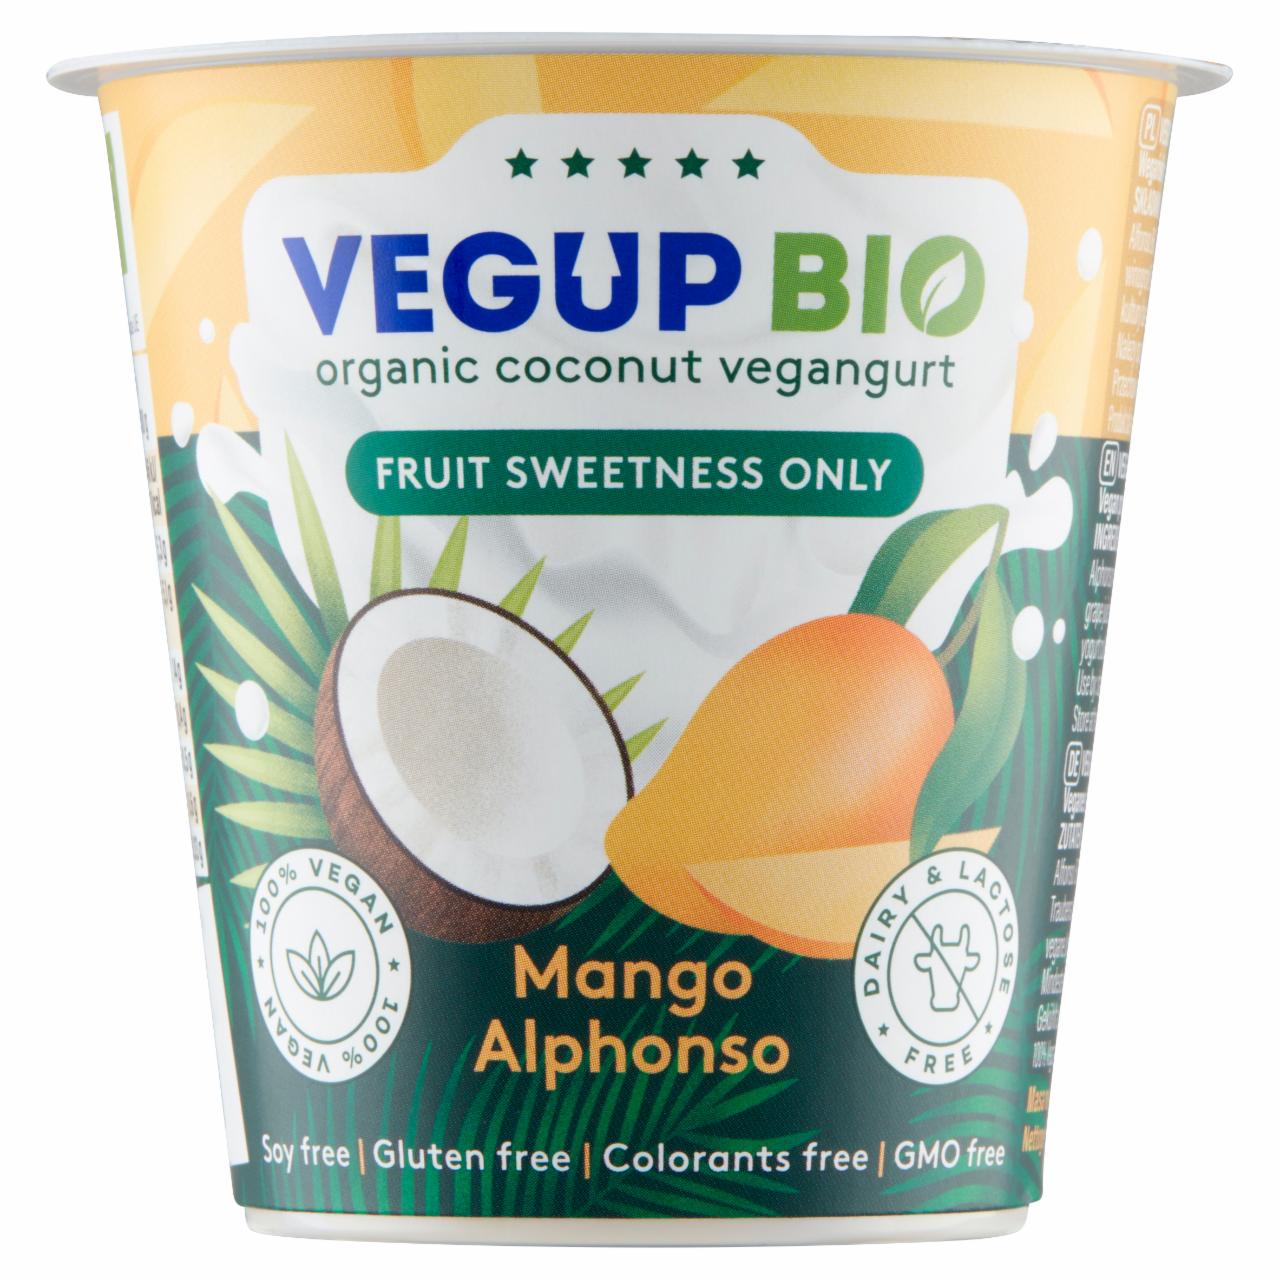 Zdjęcia - Vegup Bio Kokosowy vegangurt mango Alfonso 140 g